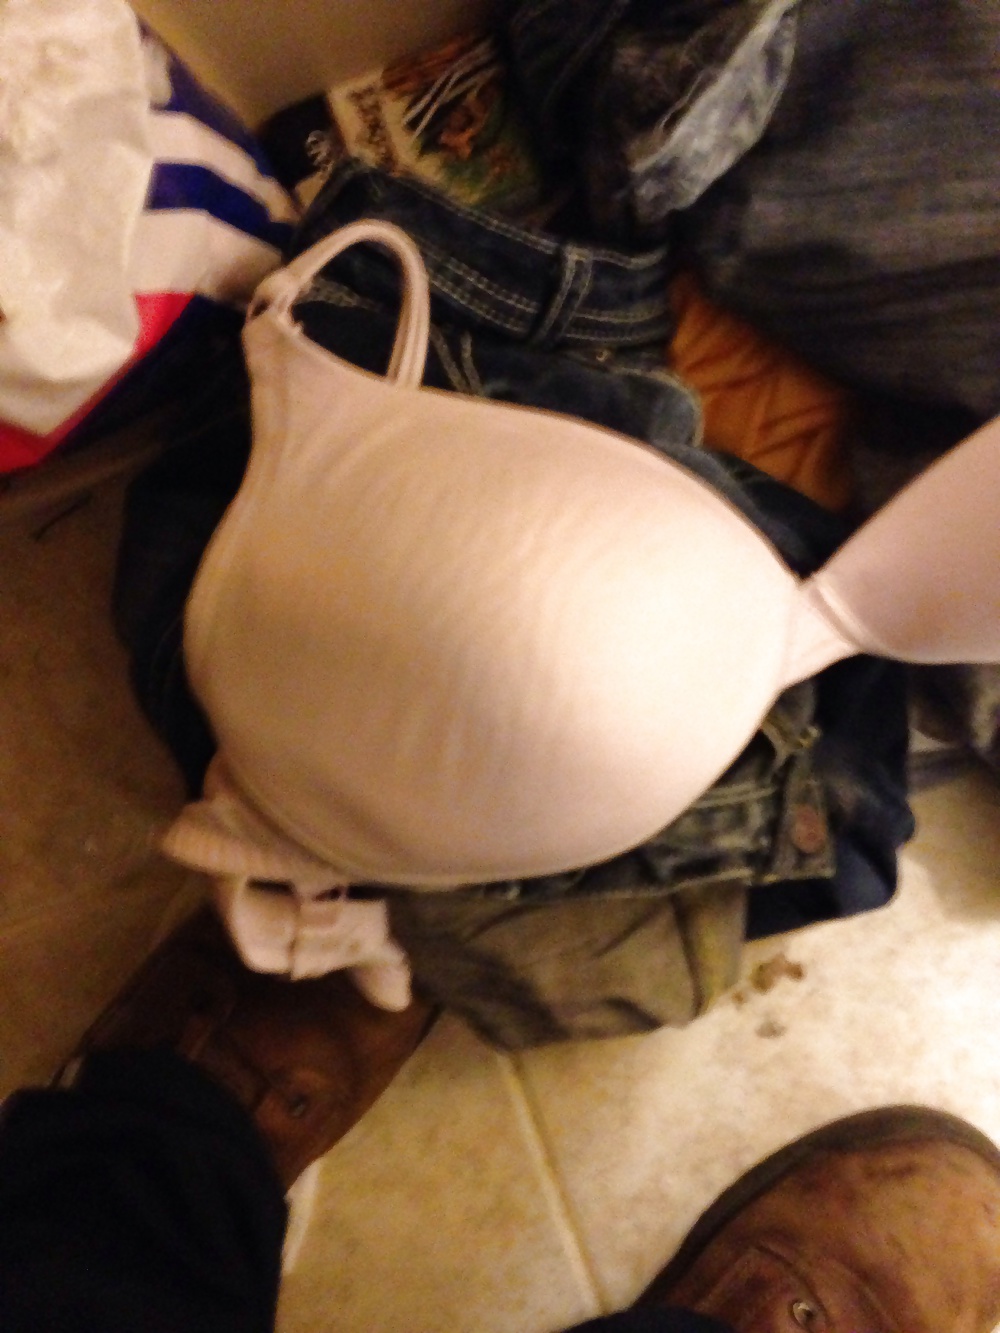 Sex Chubby stepsis's big 42DD bra man her tits are big image